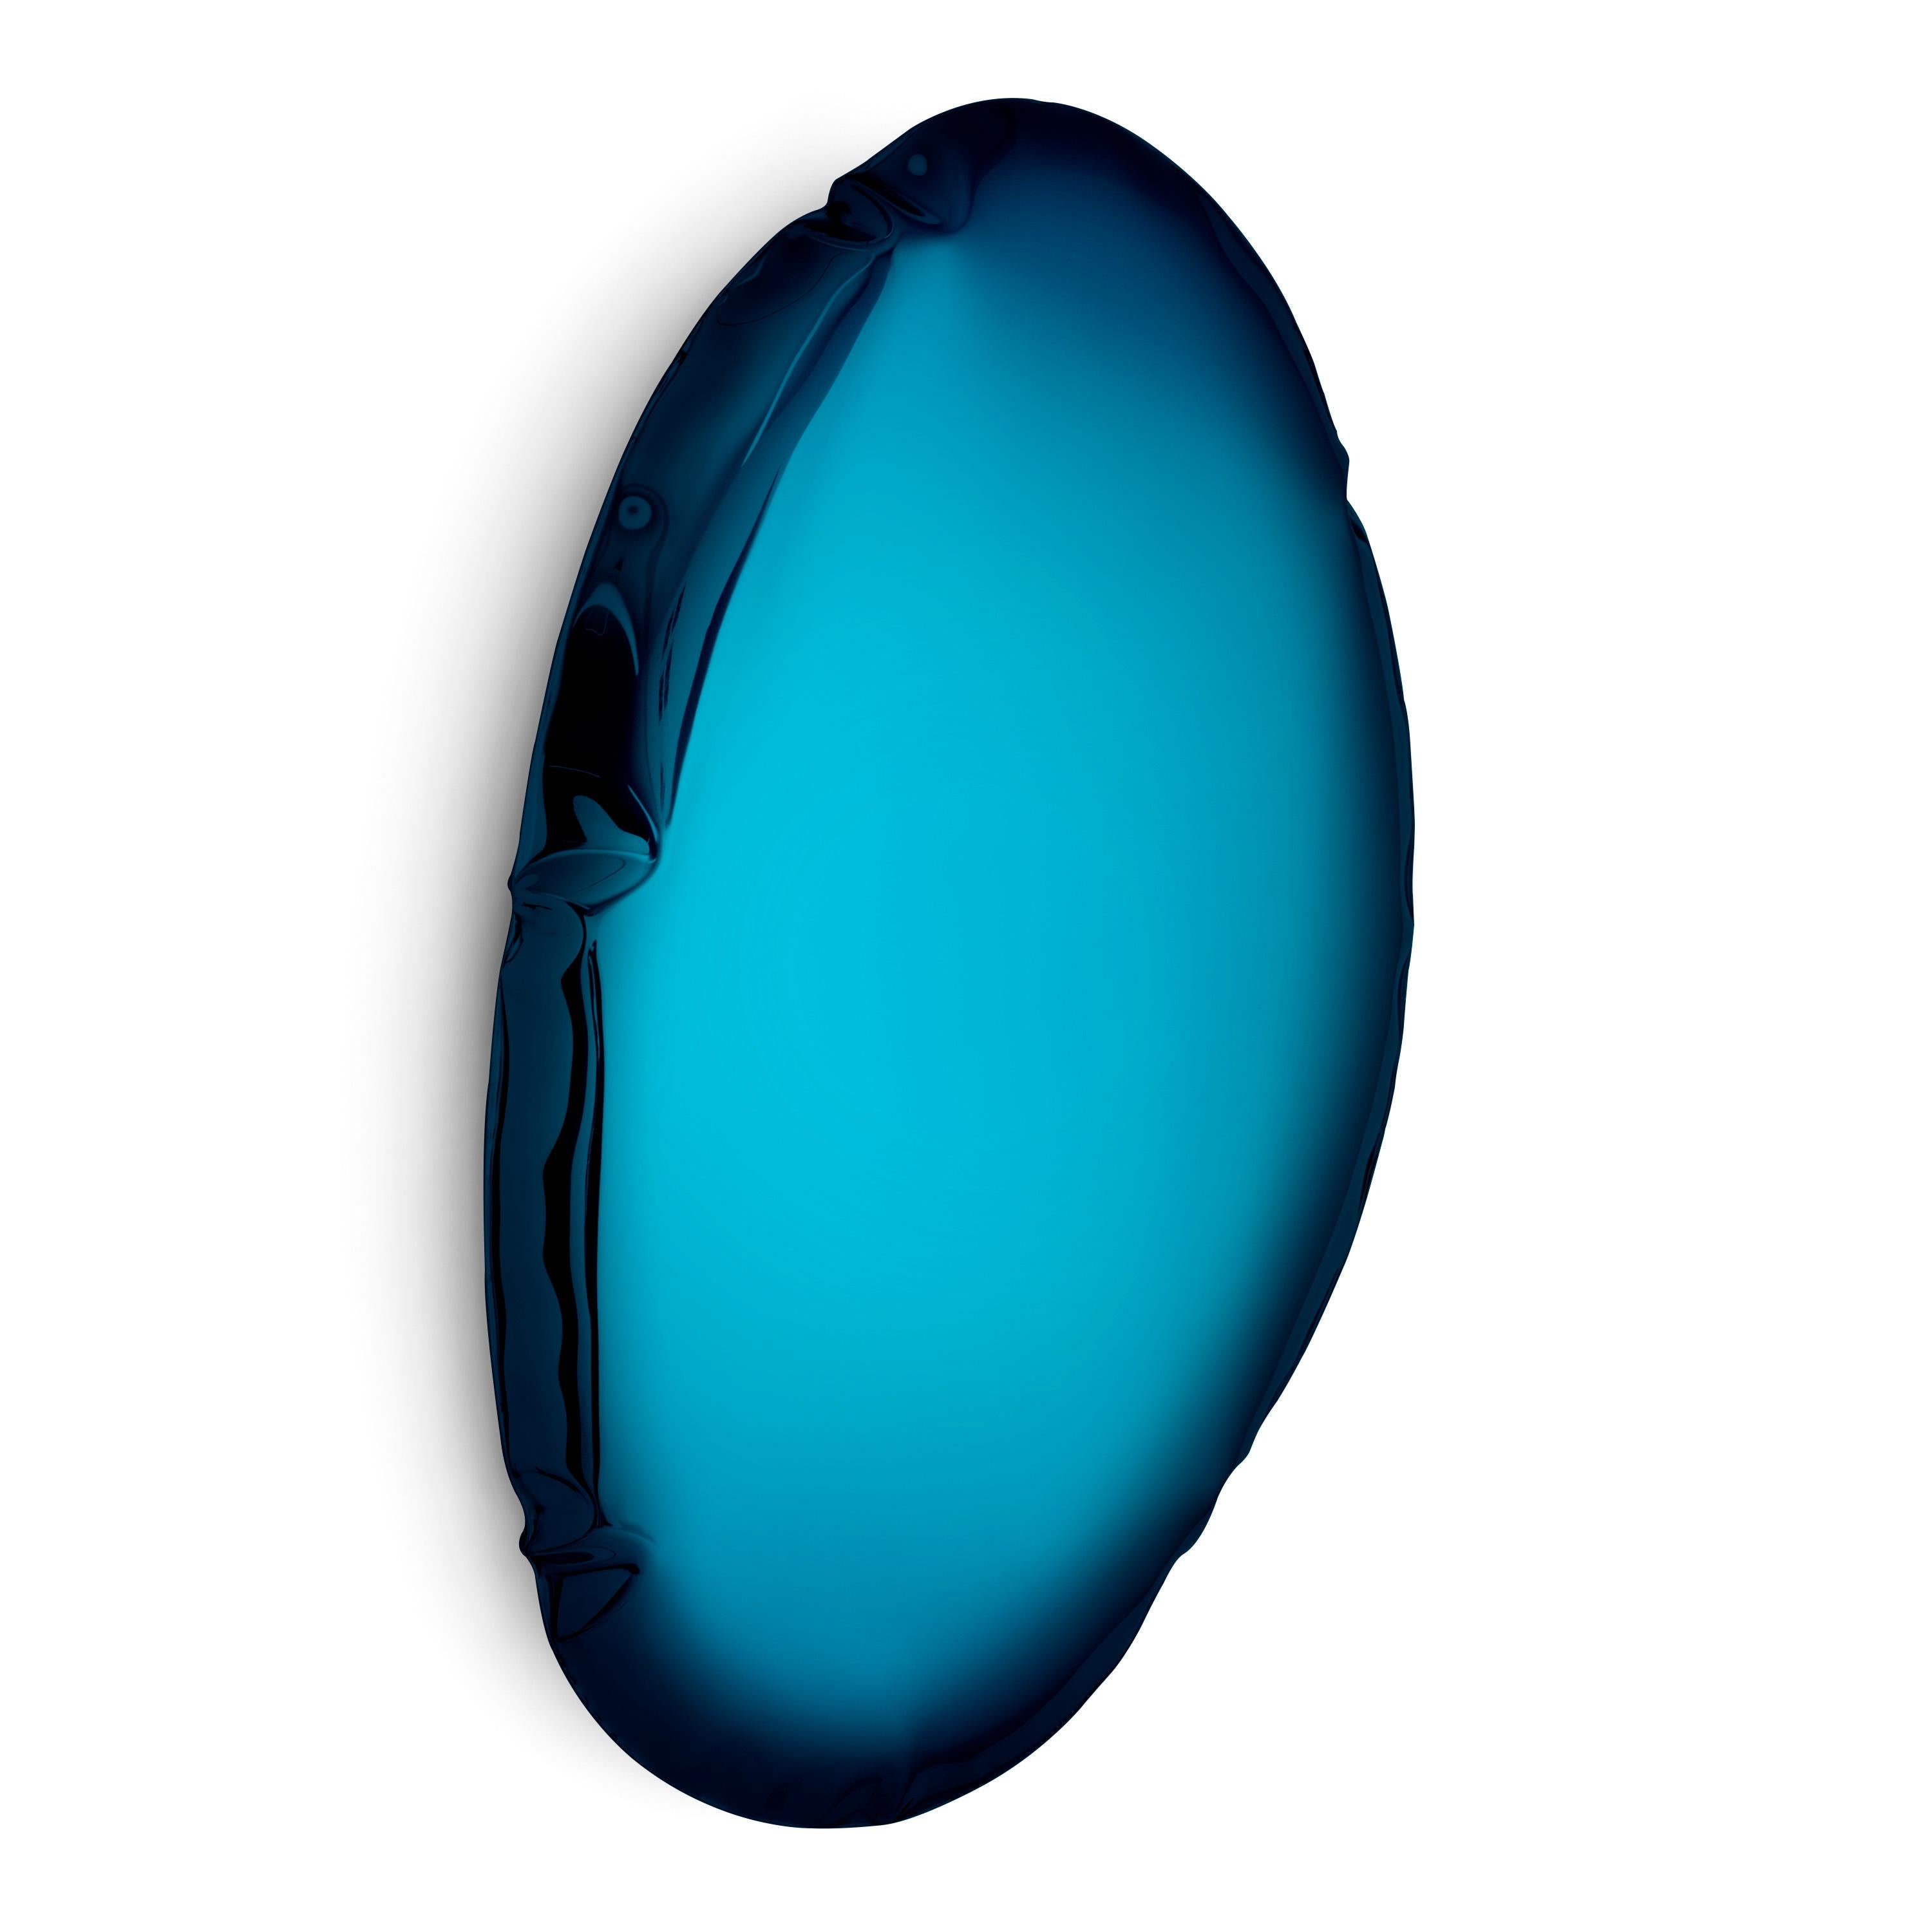 Miroir mural Tafla O5 Deep Space Blue de Zieta
Dimensions : D 6 x L 40 x H 60 cm 
Matériau : Acier inoxydable.
Finition : Deep Space Blue.
Finitions disponibles : Acier inoxydable, blanc mat, saphir/émeraude, saphir, émeraude, bleu espace profond,